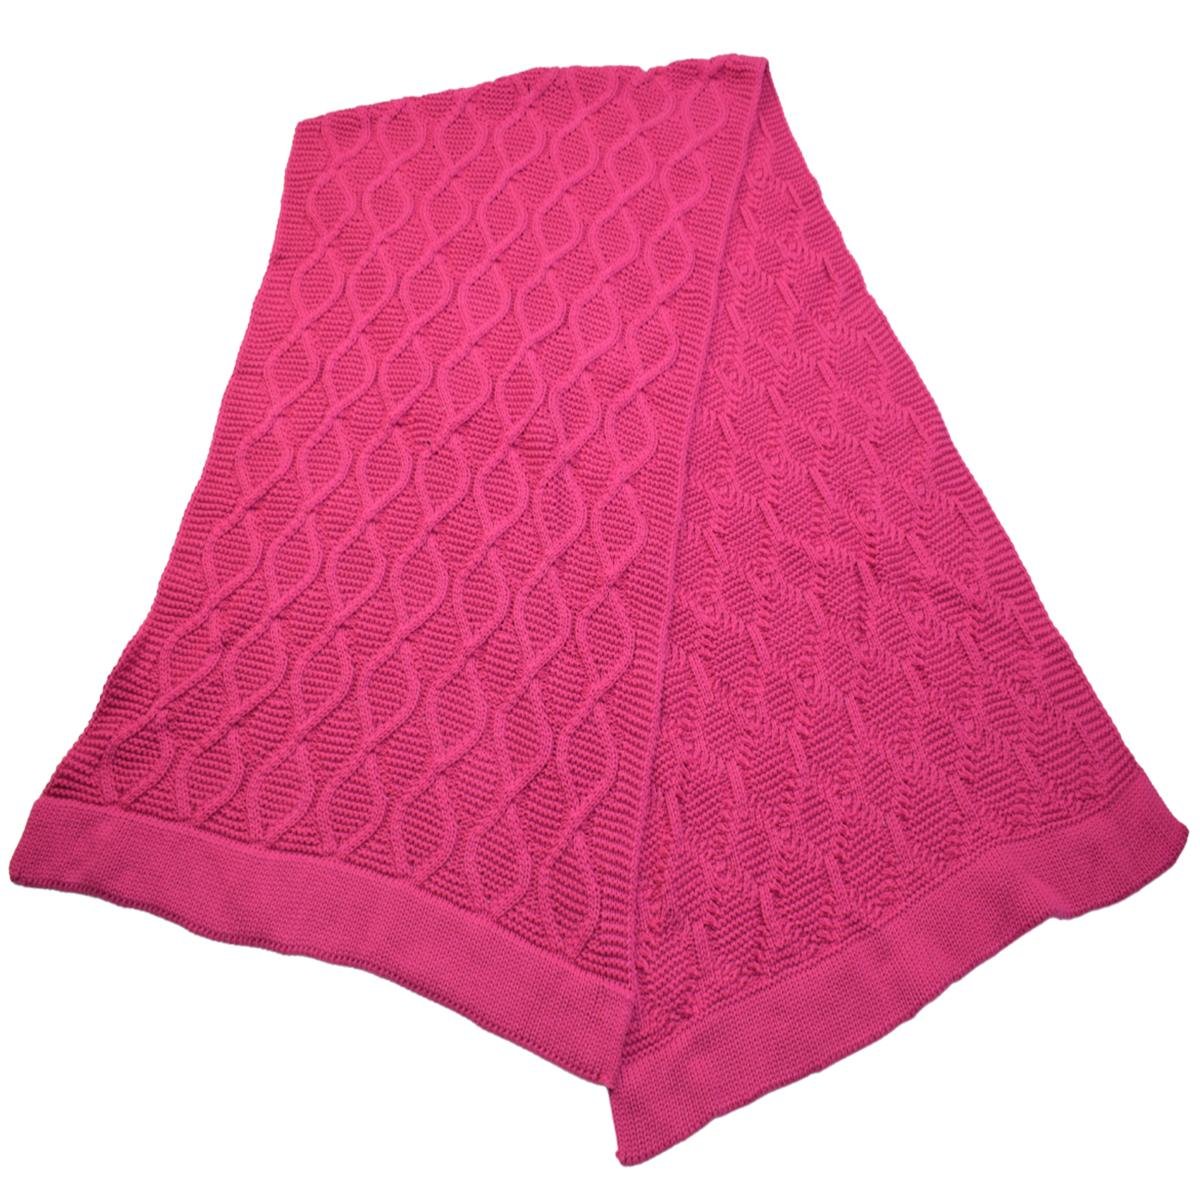 Peseira de tricot cama Queen 60 x 220cm arabescos Rosa Pink - 2